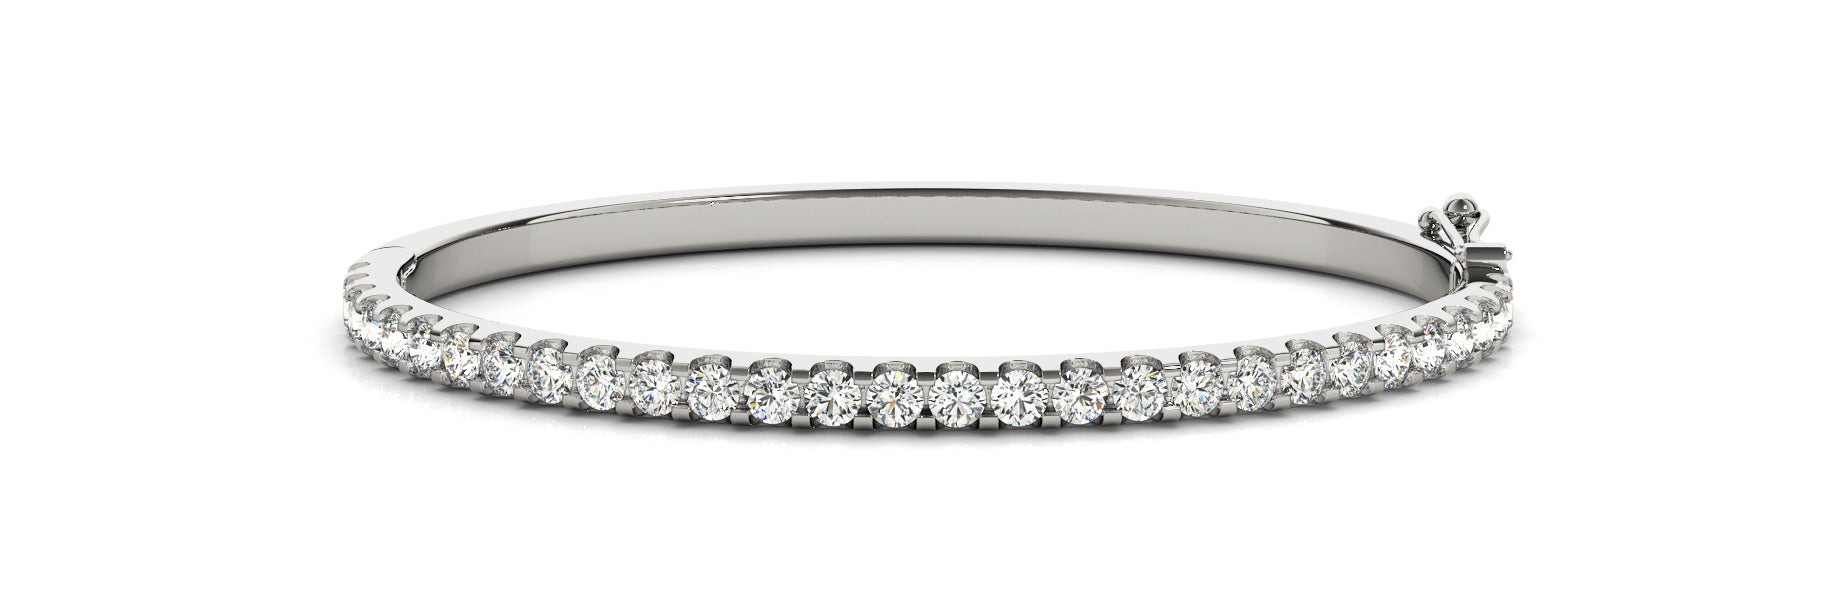 Diamond Bangle Bracelet Round Shaped 4 Carat in 14K & 18K White Gold Front View